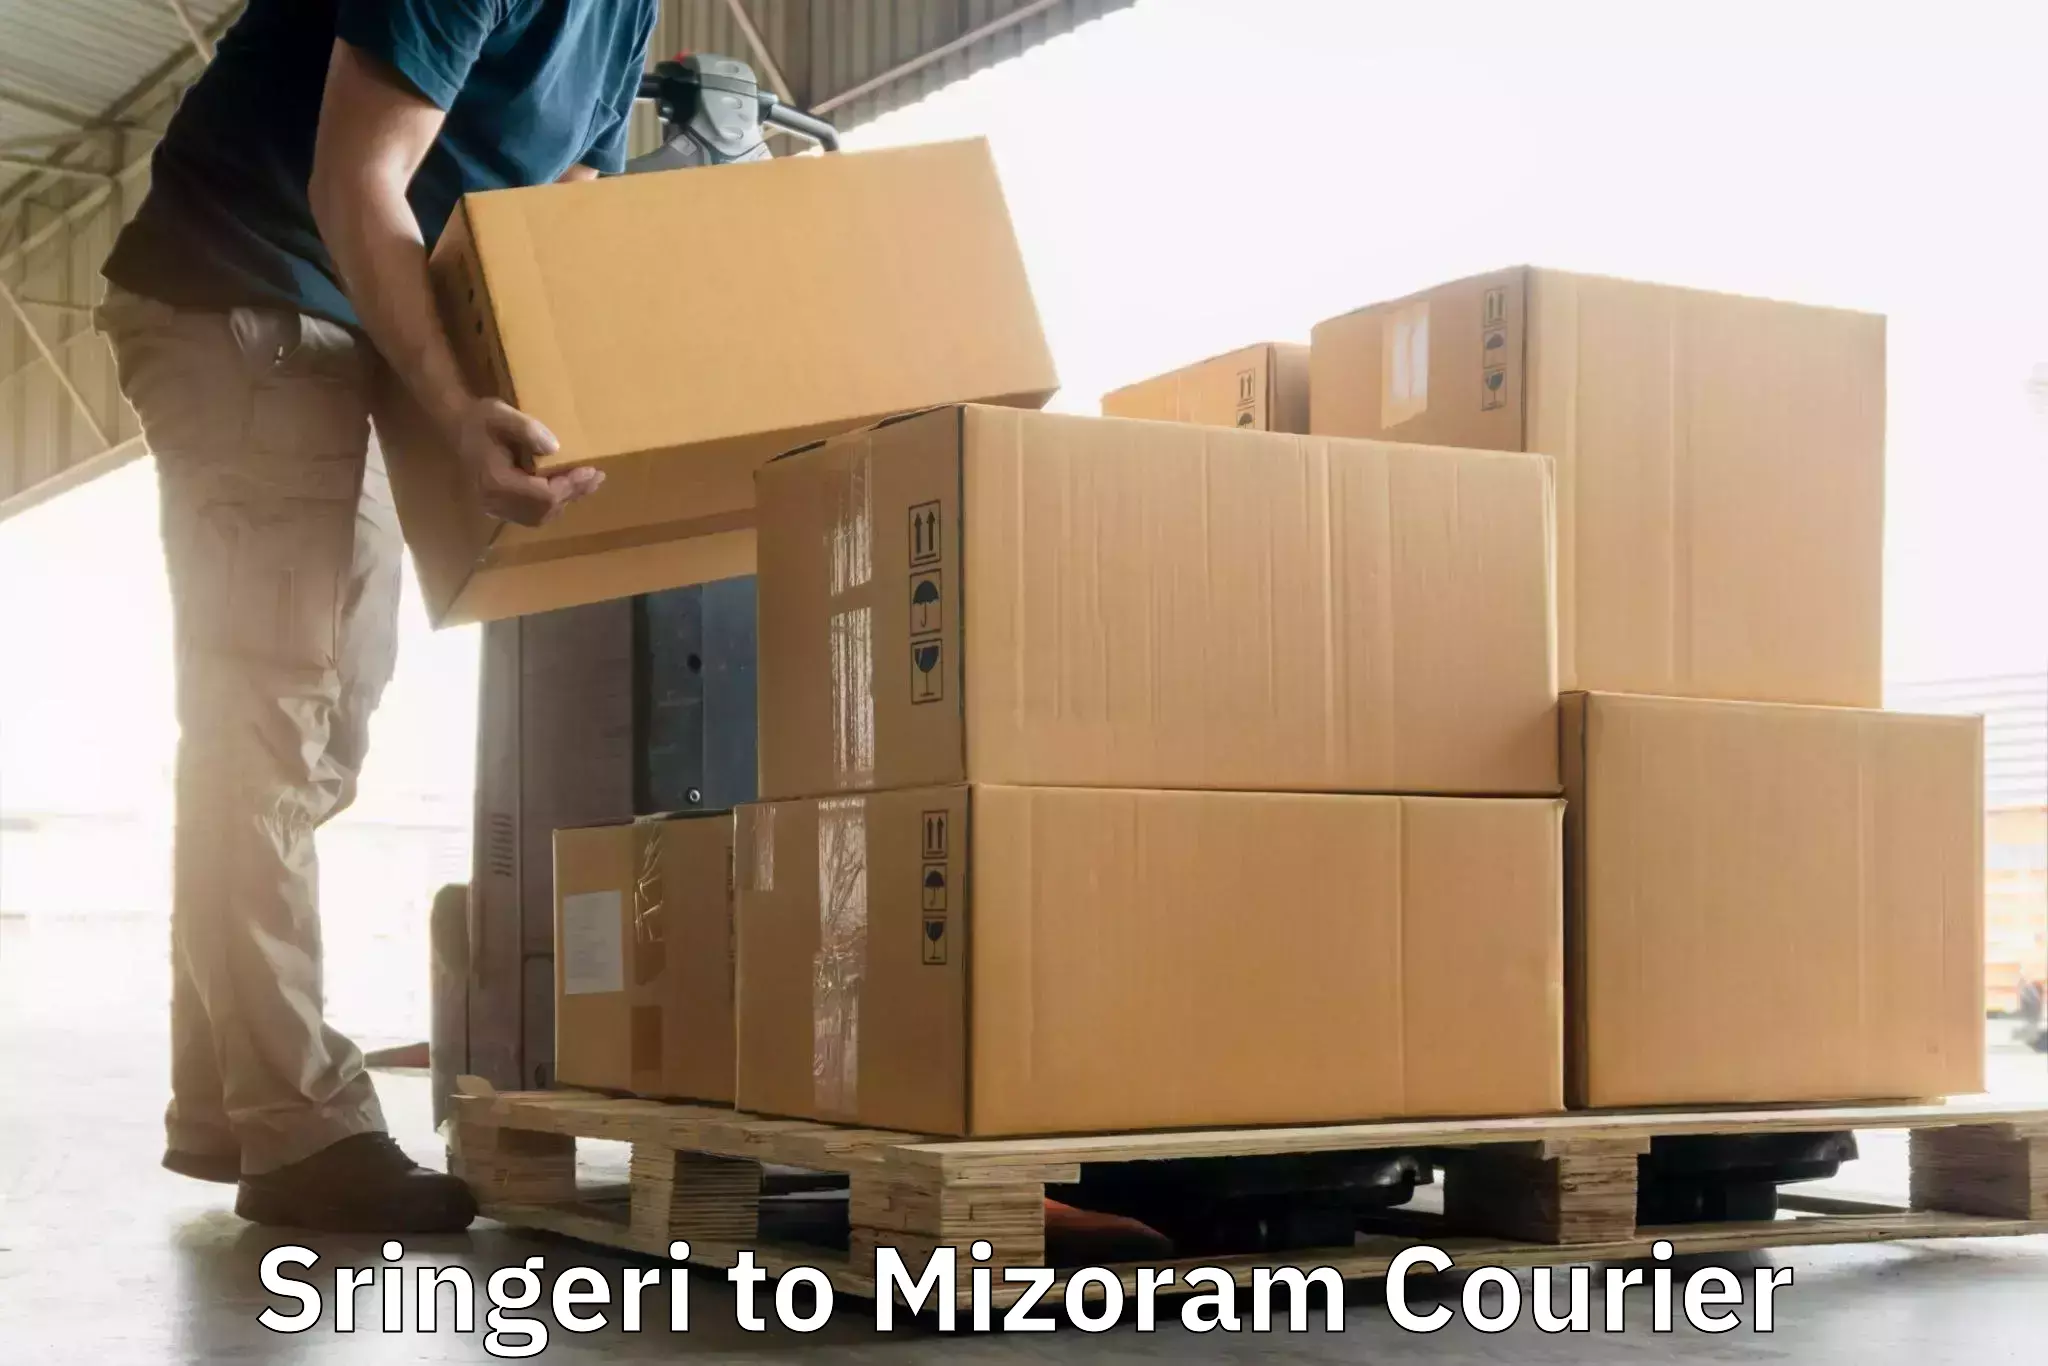 User-friendly courier app Sringeri to Mizoram